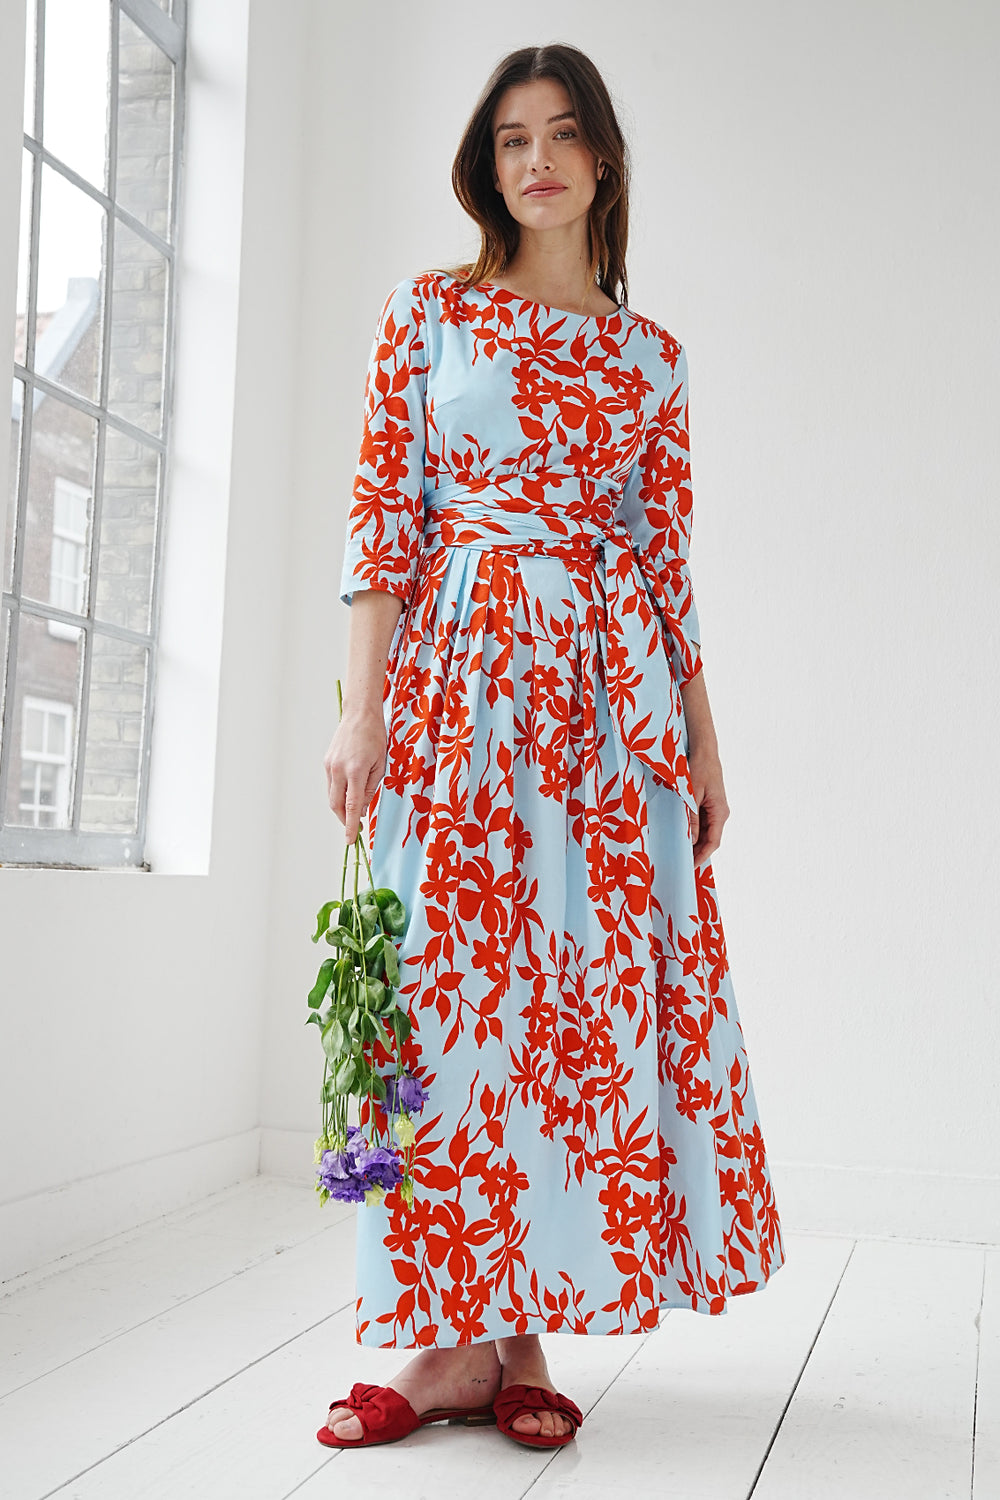 MARIANNA DÉRI | A-line cut floral printed midi dress in baby blue and orange | asitasahabi.com